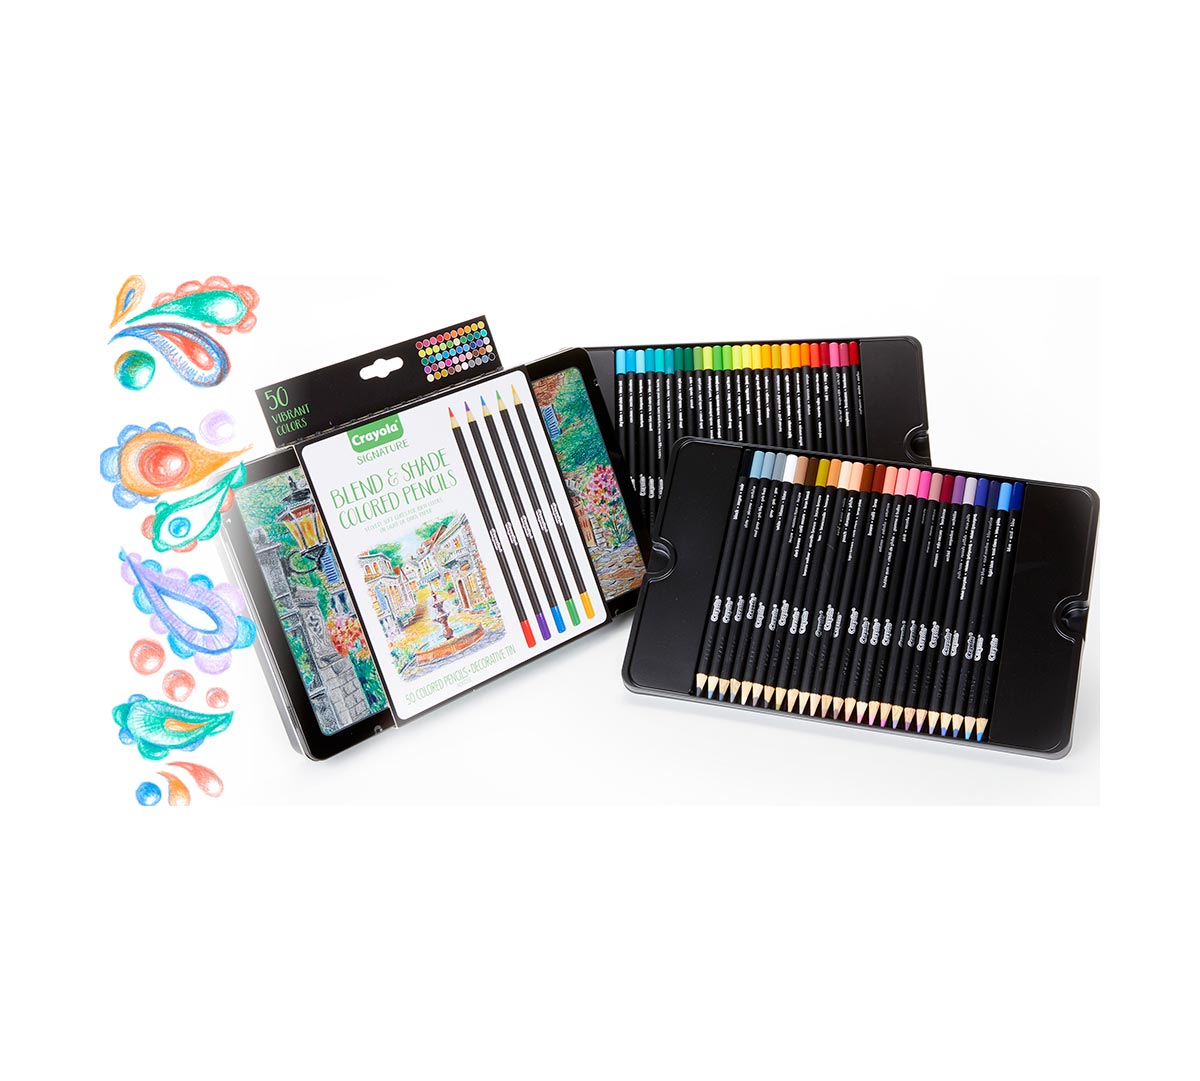 50 Signature Blend & Shade Colored Pencils